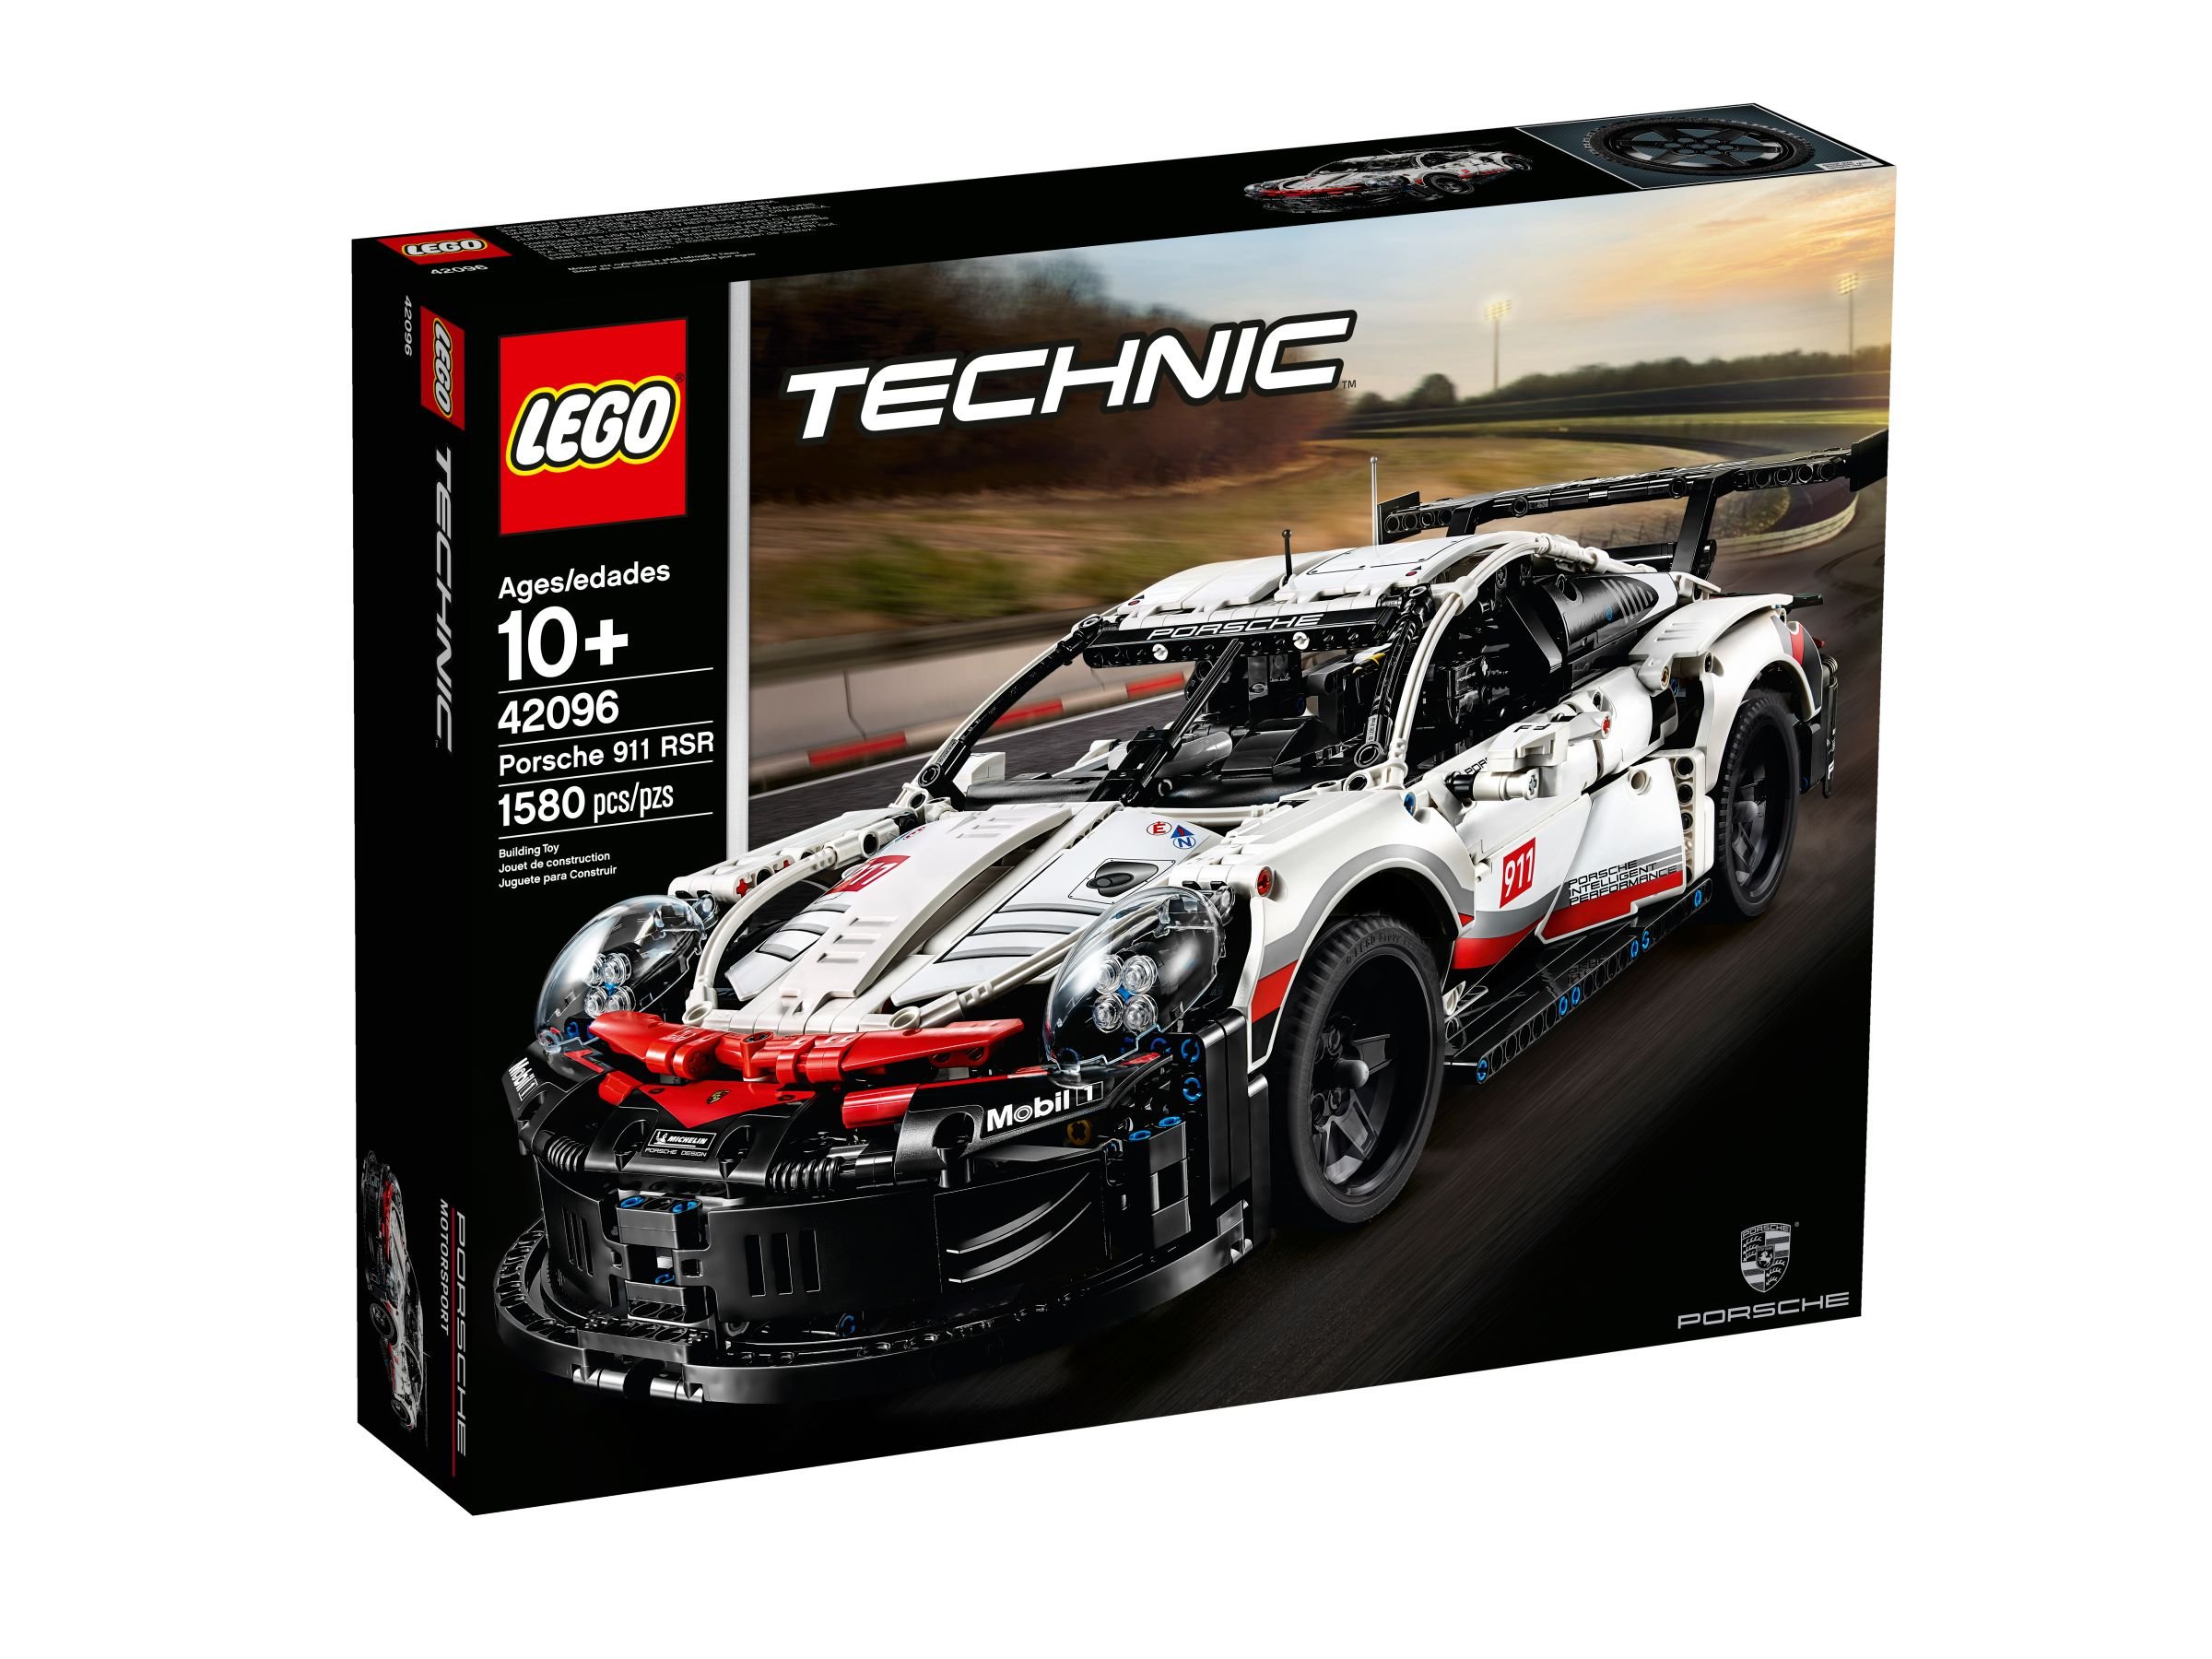 LEGO Technic 42096 Porsche 911 RSR LEGO_42096_alt1.jpg